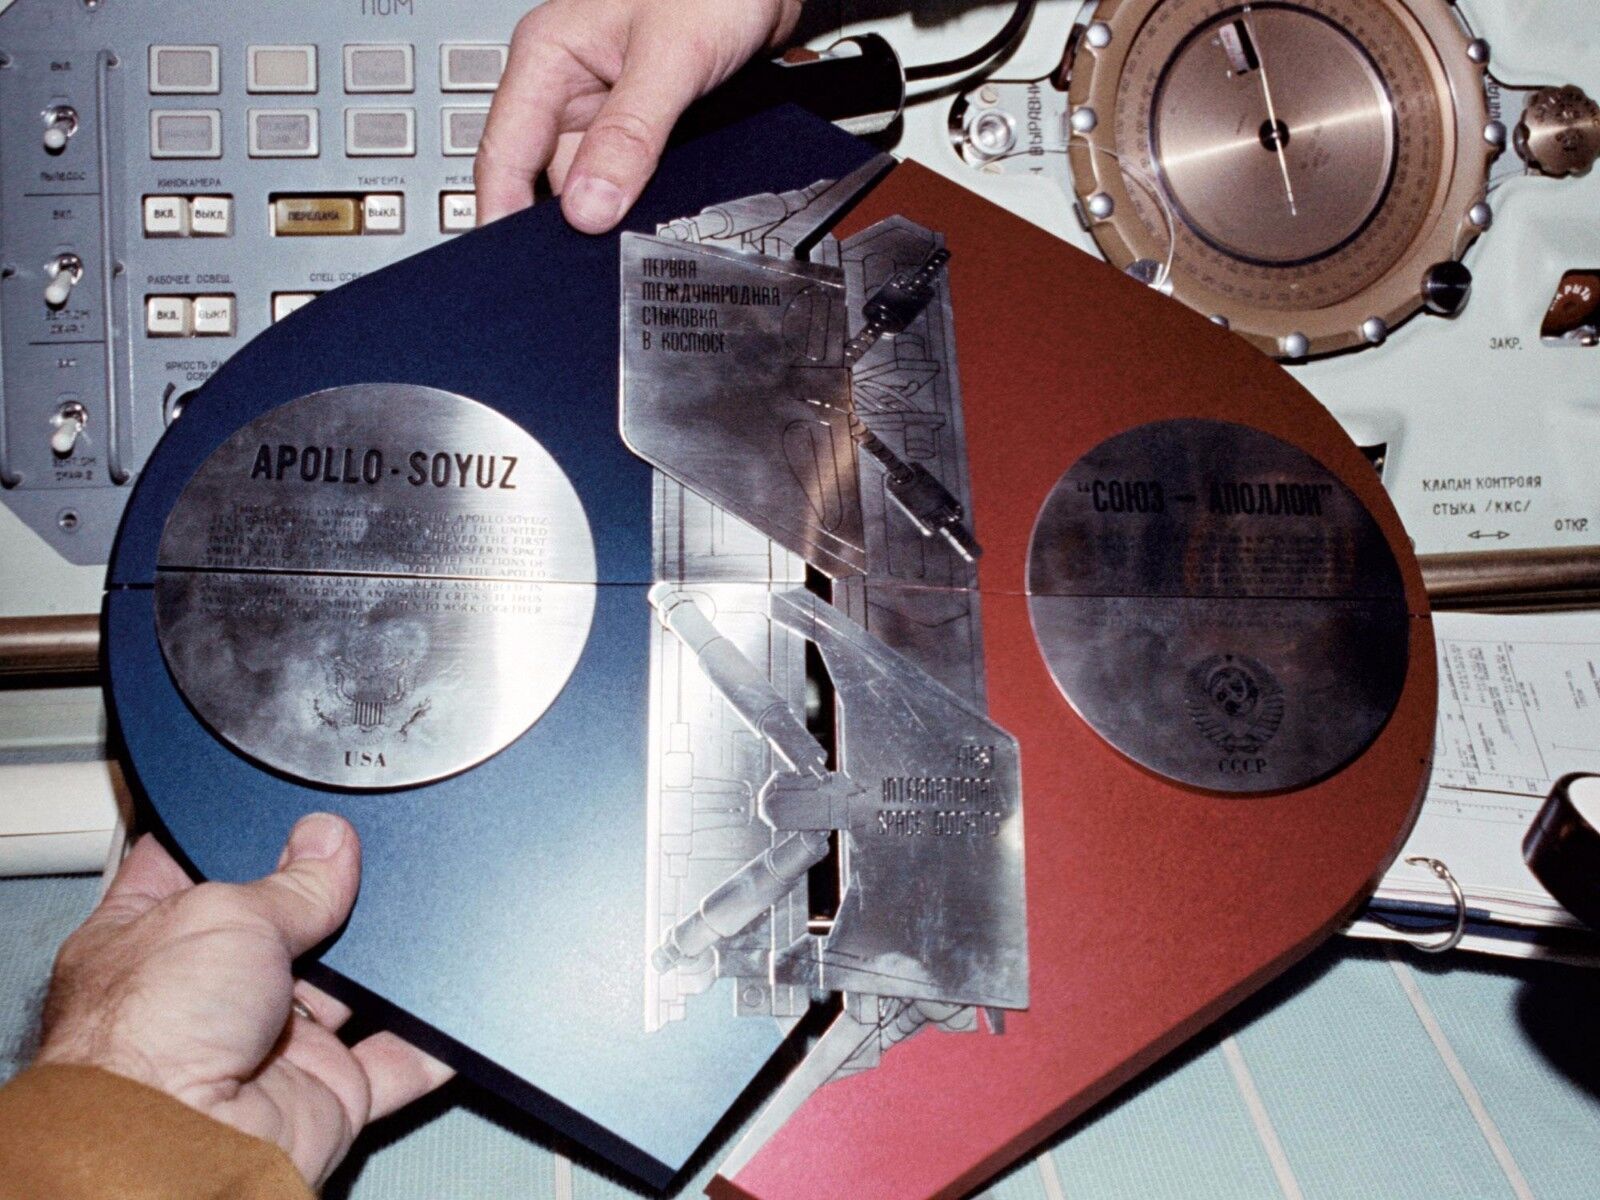 APOLLO-SOYUZ TEST PROJECT COMMEMORATIVE PLAQUE - 8X10 NASA PHOTO (EP-999)